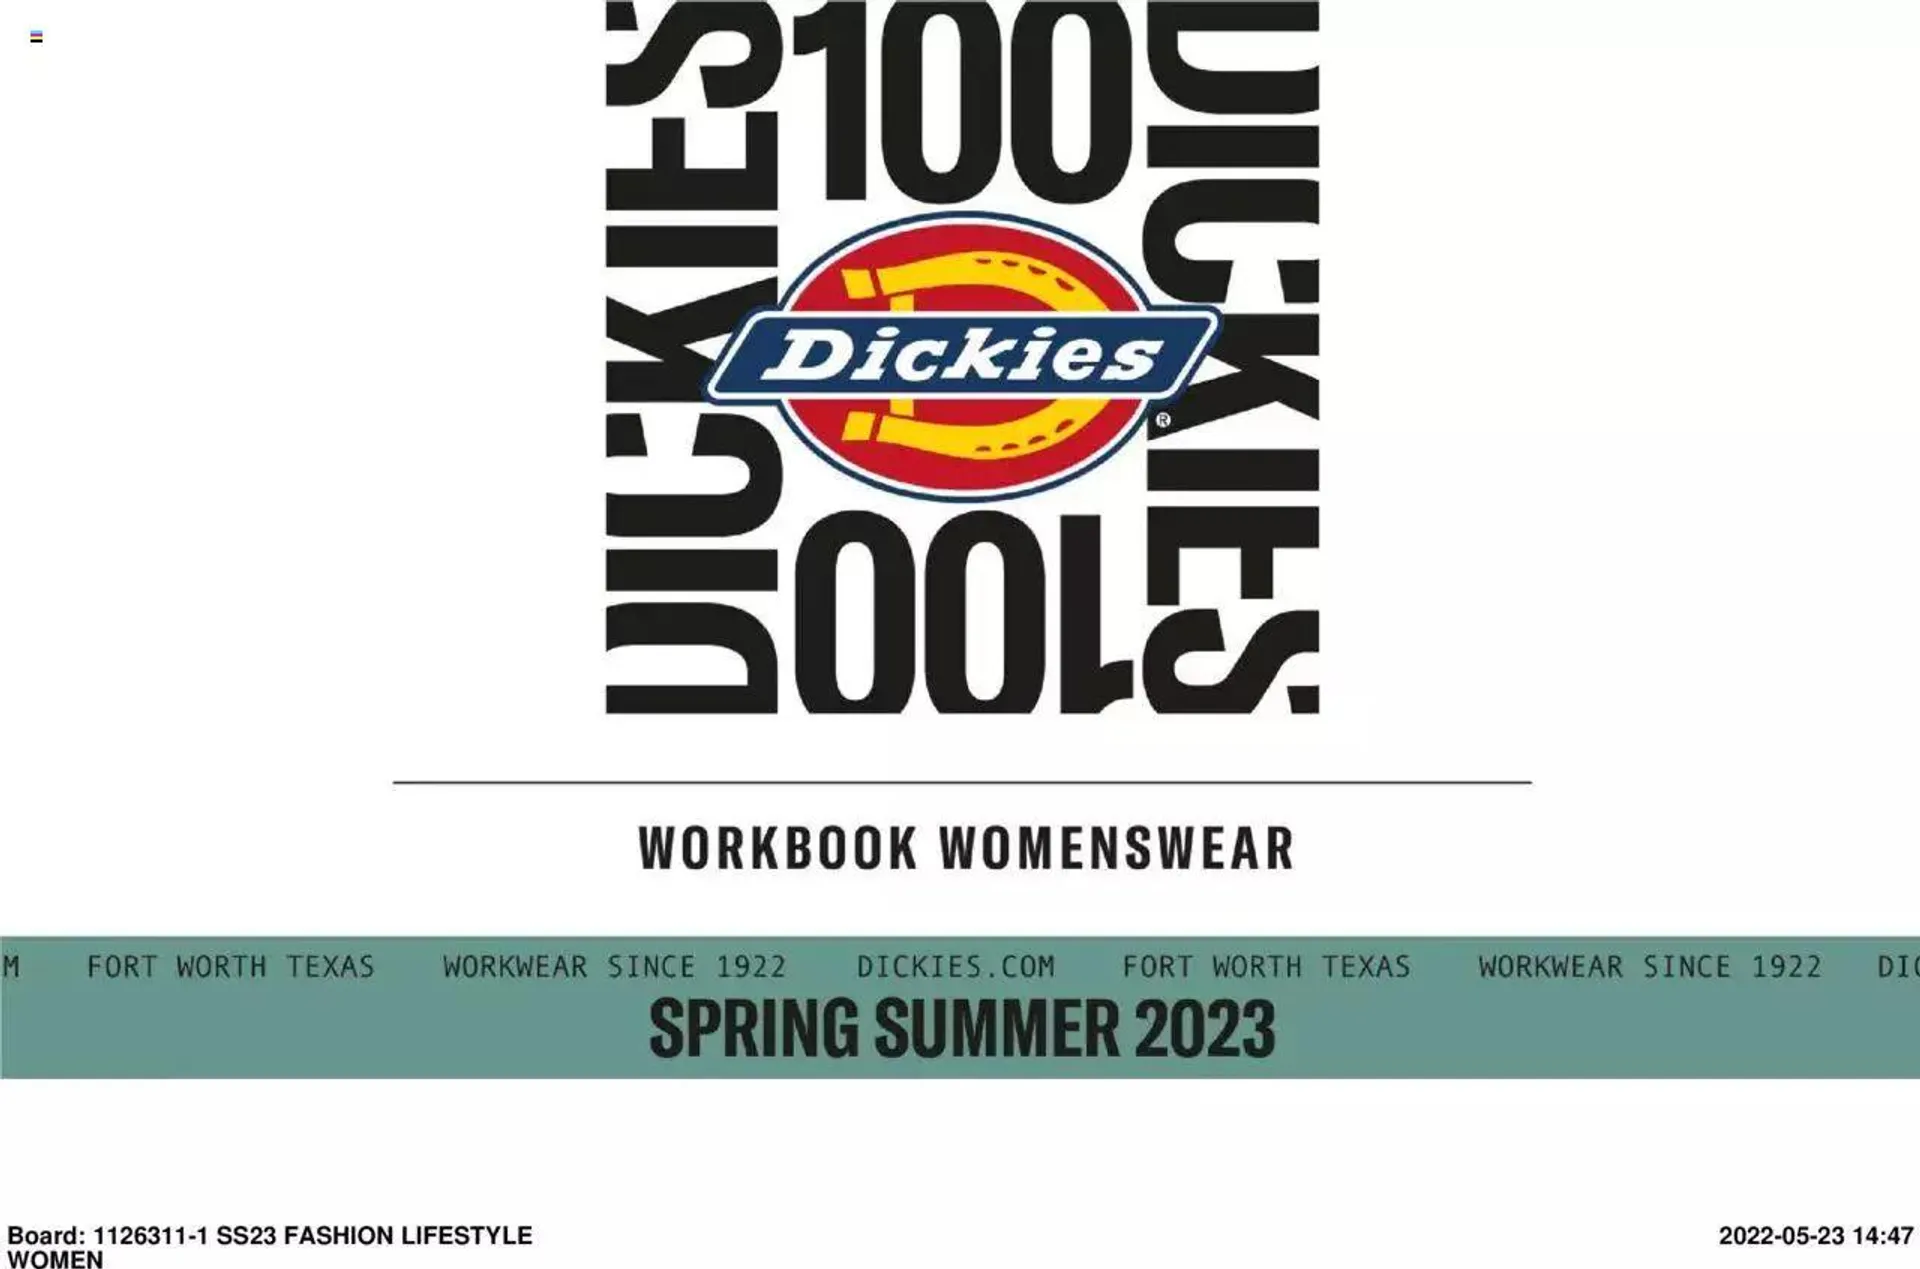 Dickies - Womenswear Workbook - 0